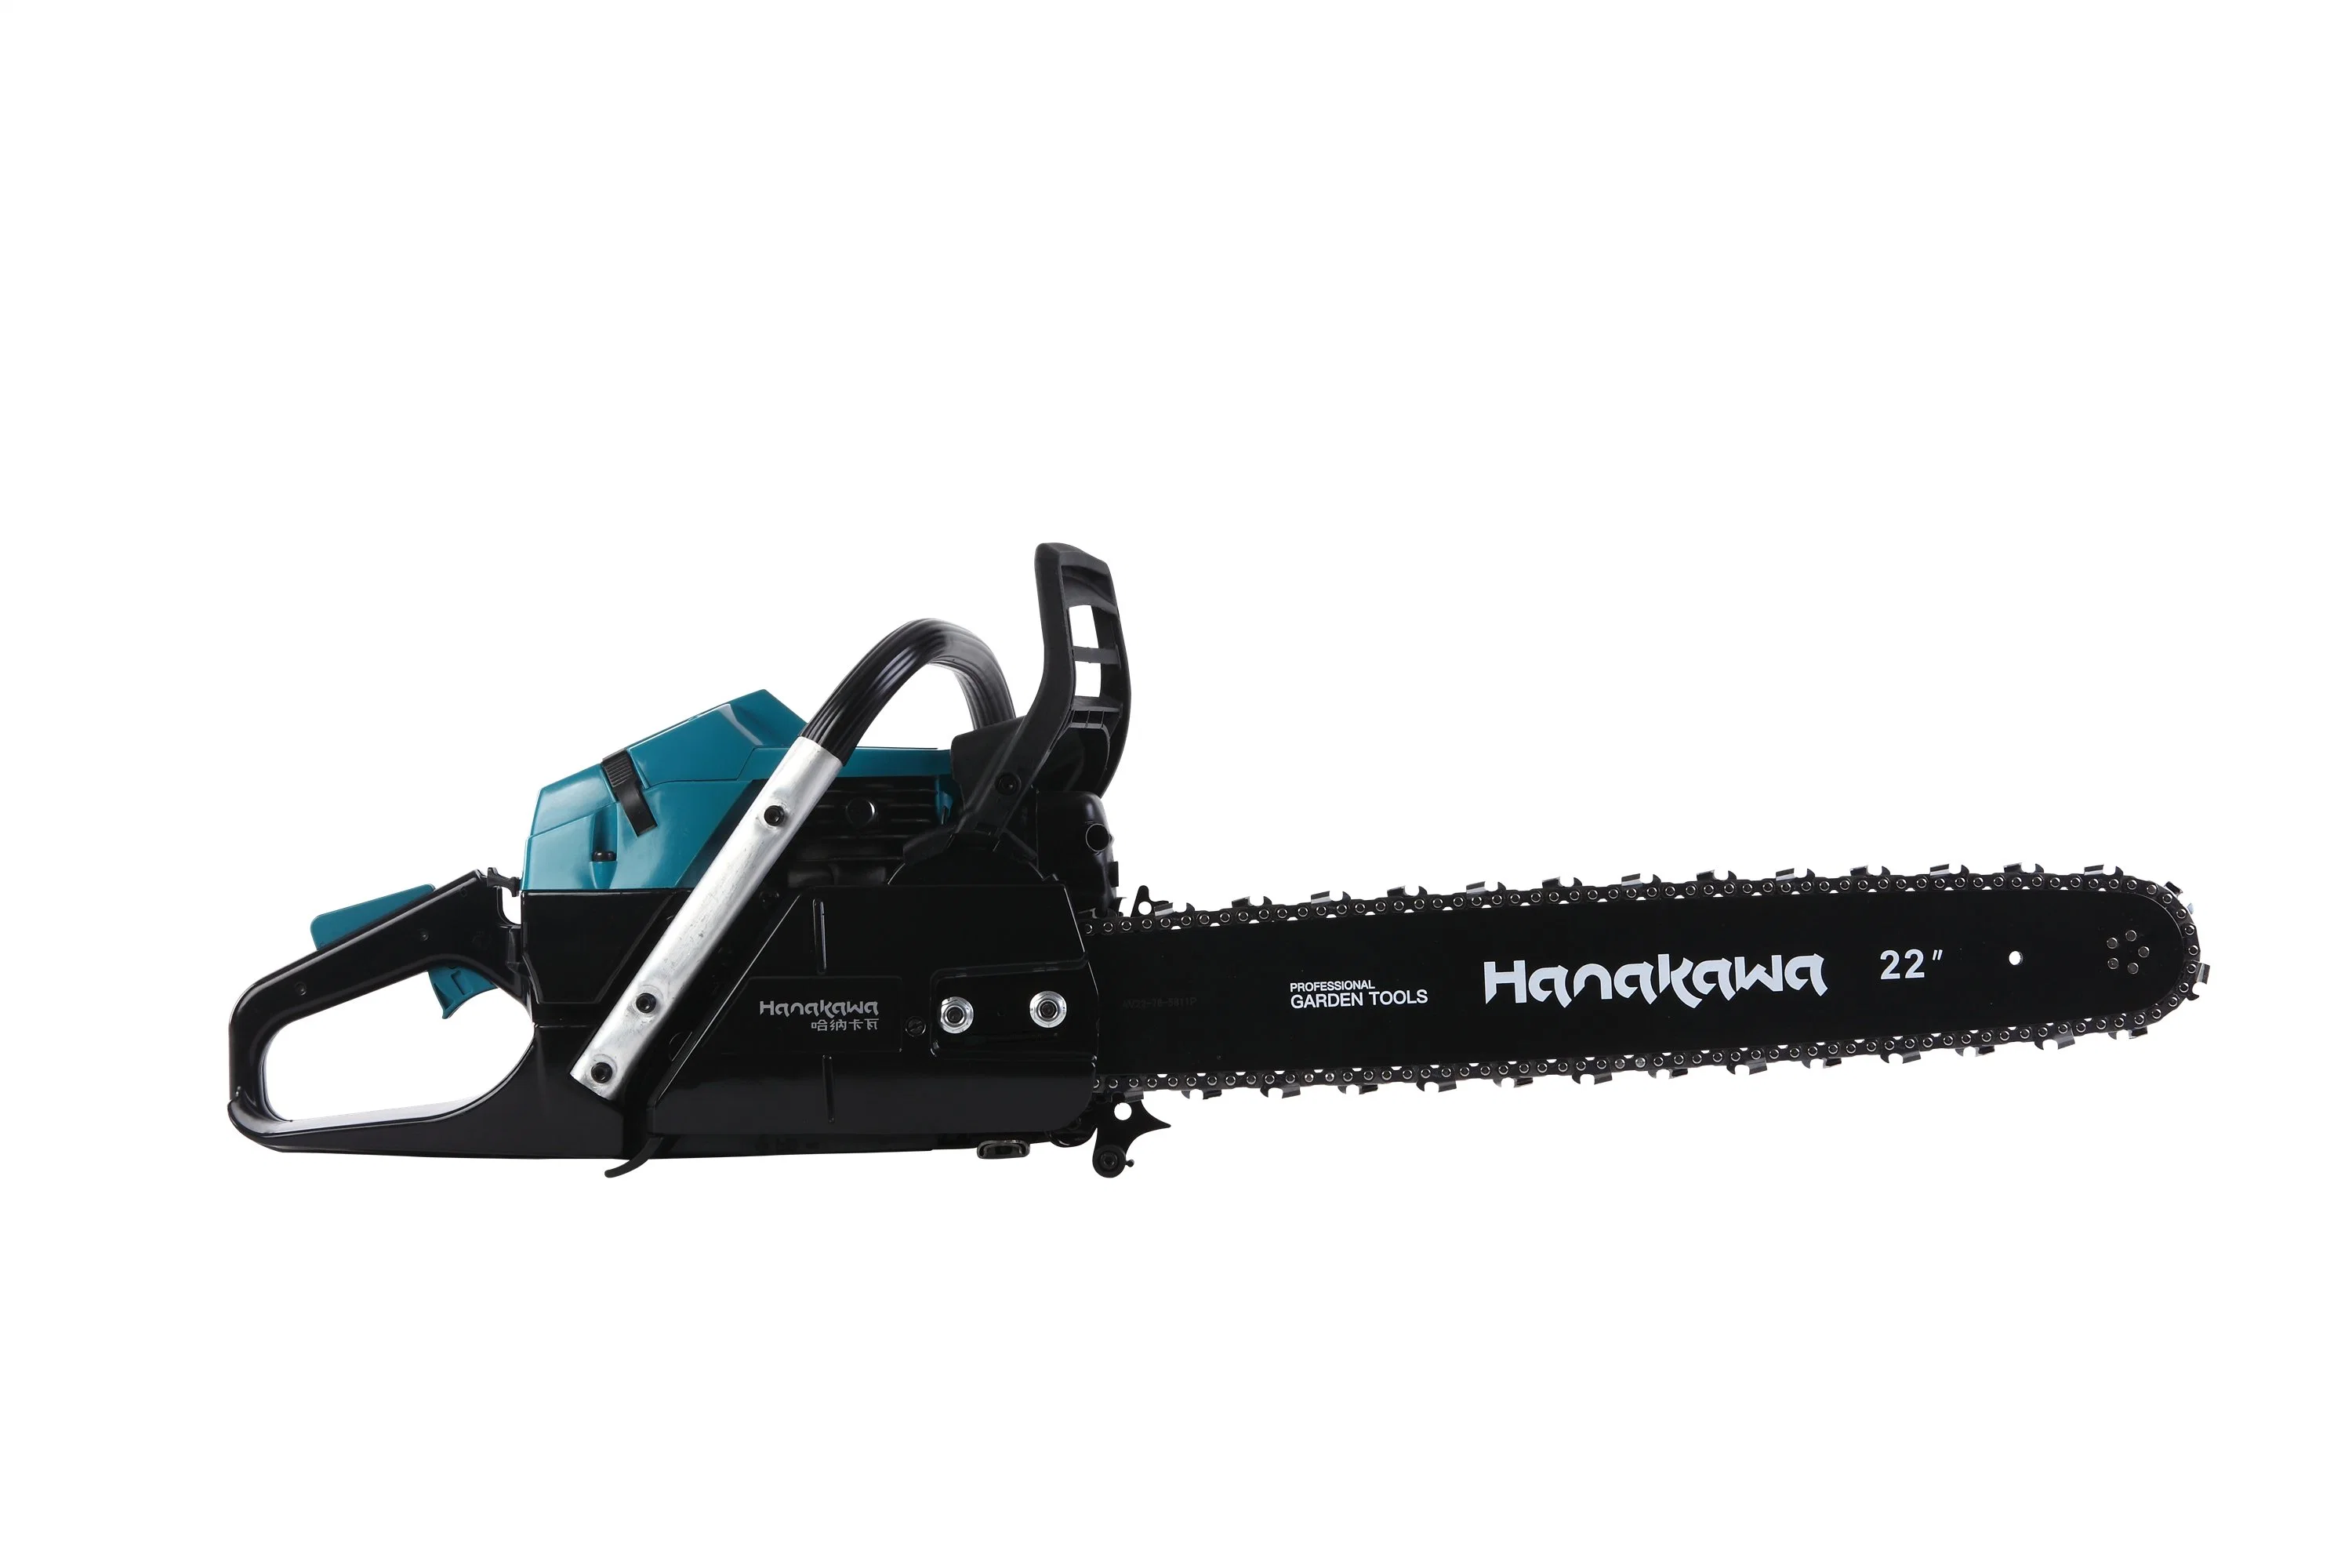 3hanakawa H865 (365) 2-Stroke 65.1cc Chainsaw Cutting Guide Rollomatic Bar Length (inch) 20" 22" Optional Power Saws Garden Tools for 365 Chainsaw